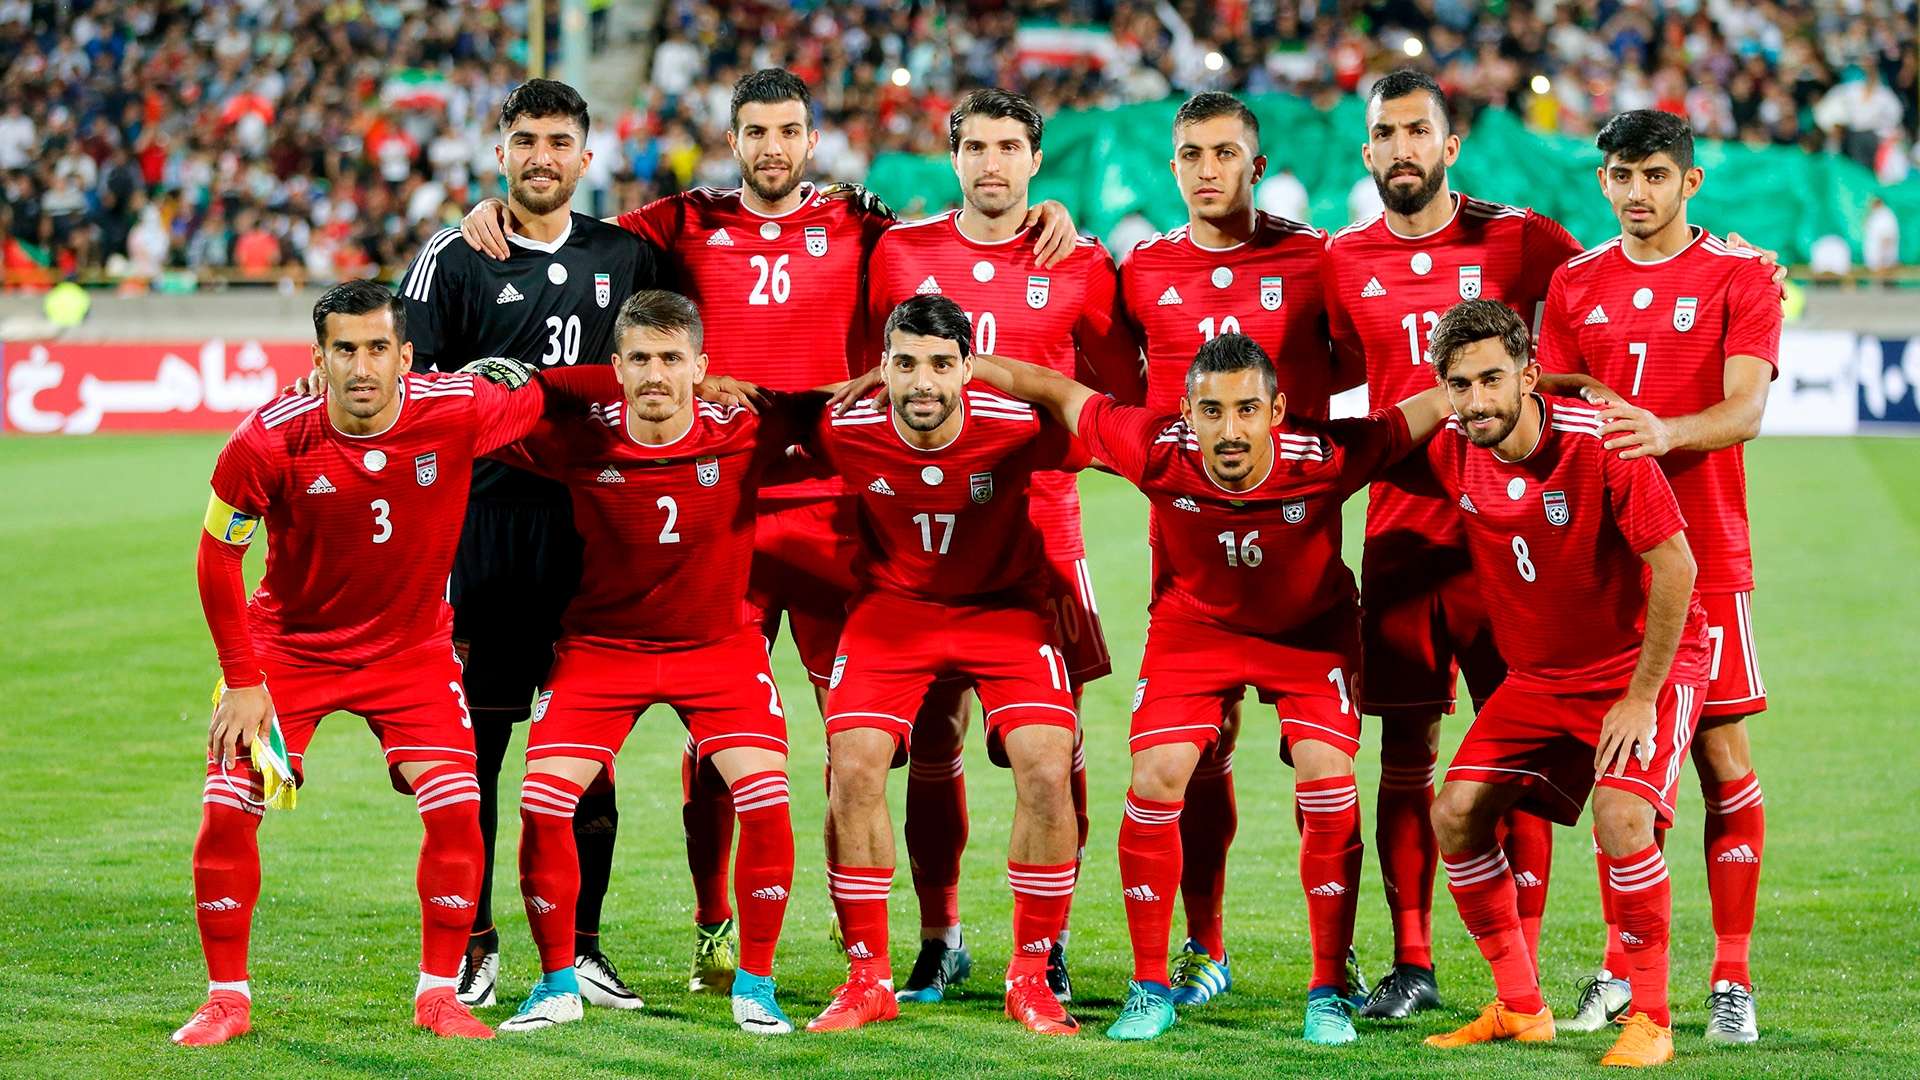 Iran national team 2018